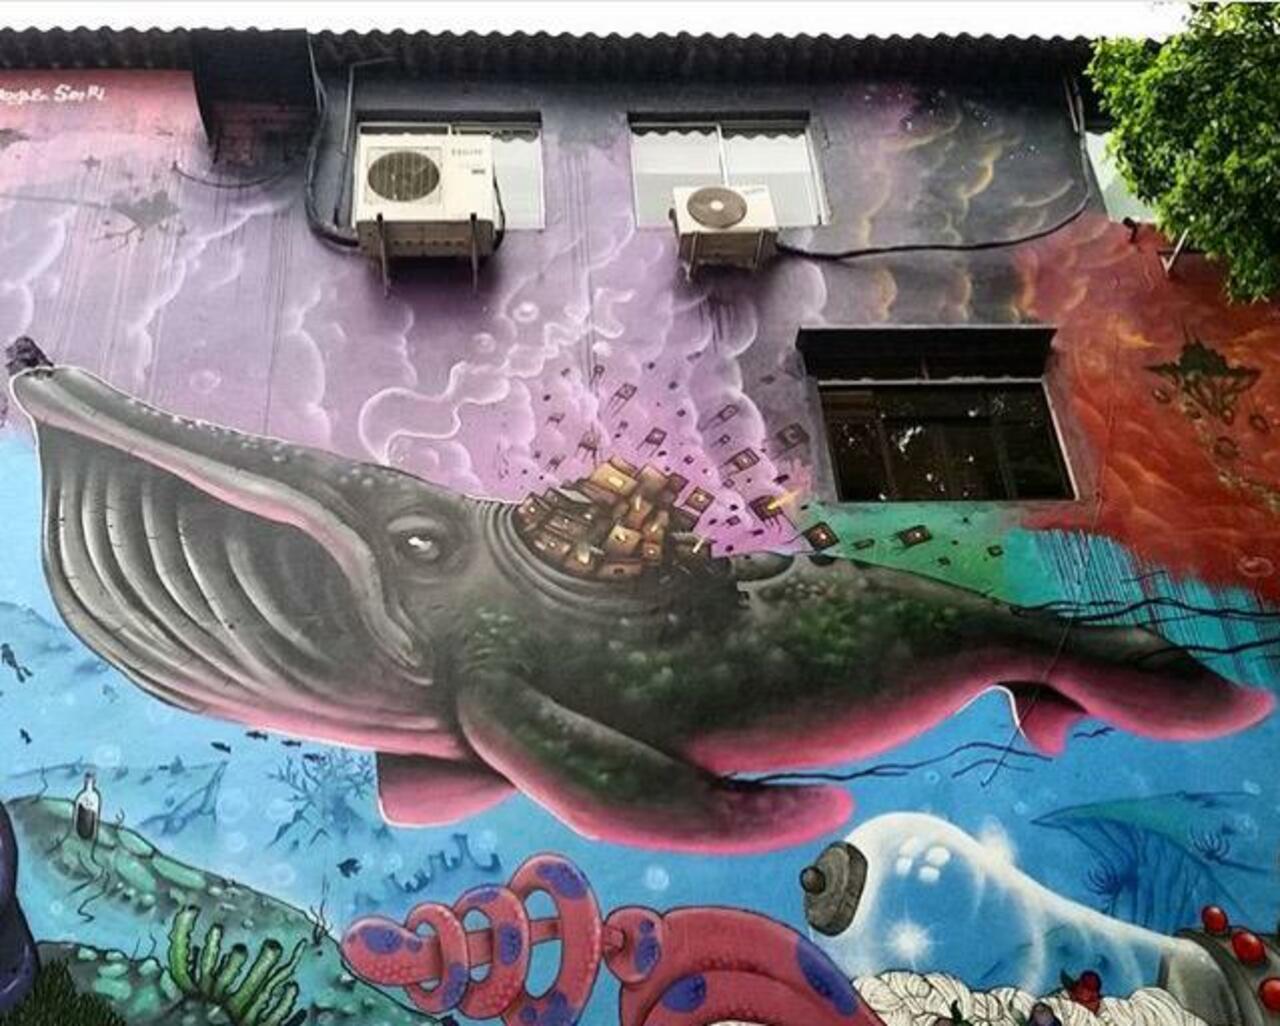 #satvadesignstudio : Street Art by joks_johnes Pinheiros, São Paulo 

#art #mural #graffiti #streetart http://t.co/bICYWaAycV